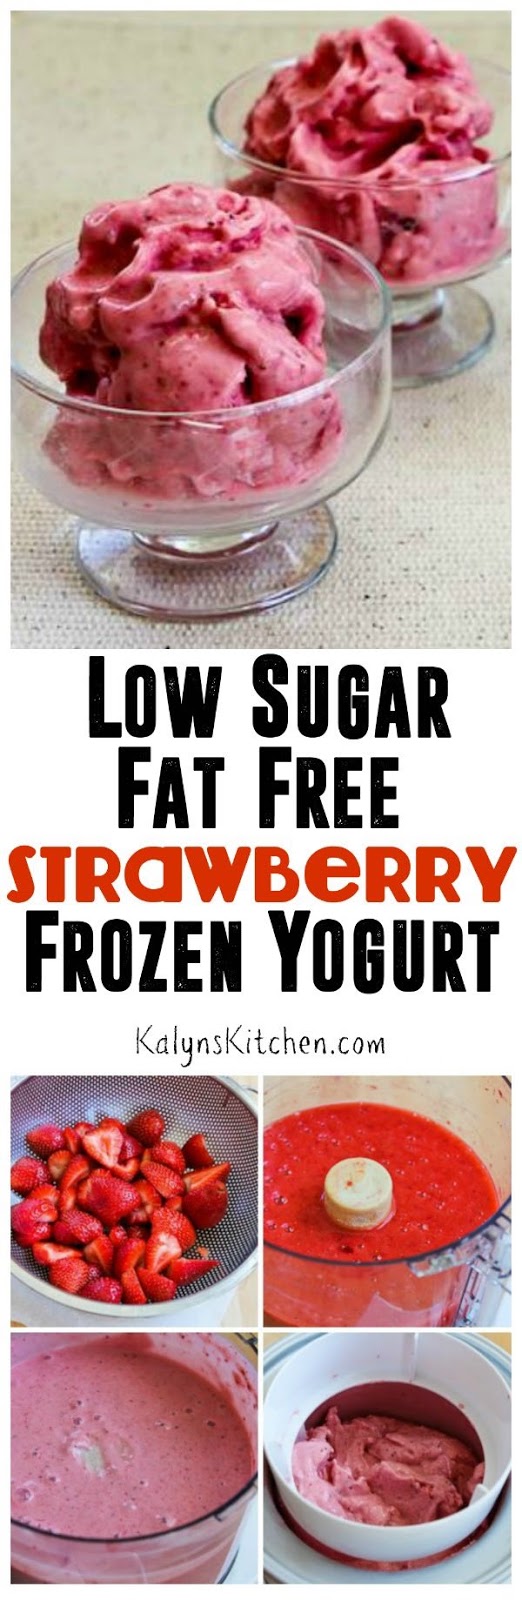 Low-Sugar Fat-Free Strawberry Frozen Yogurt - Kalyn's Kitchen